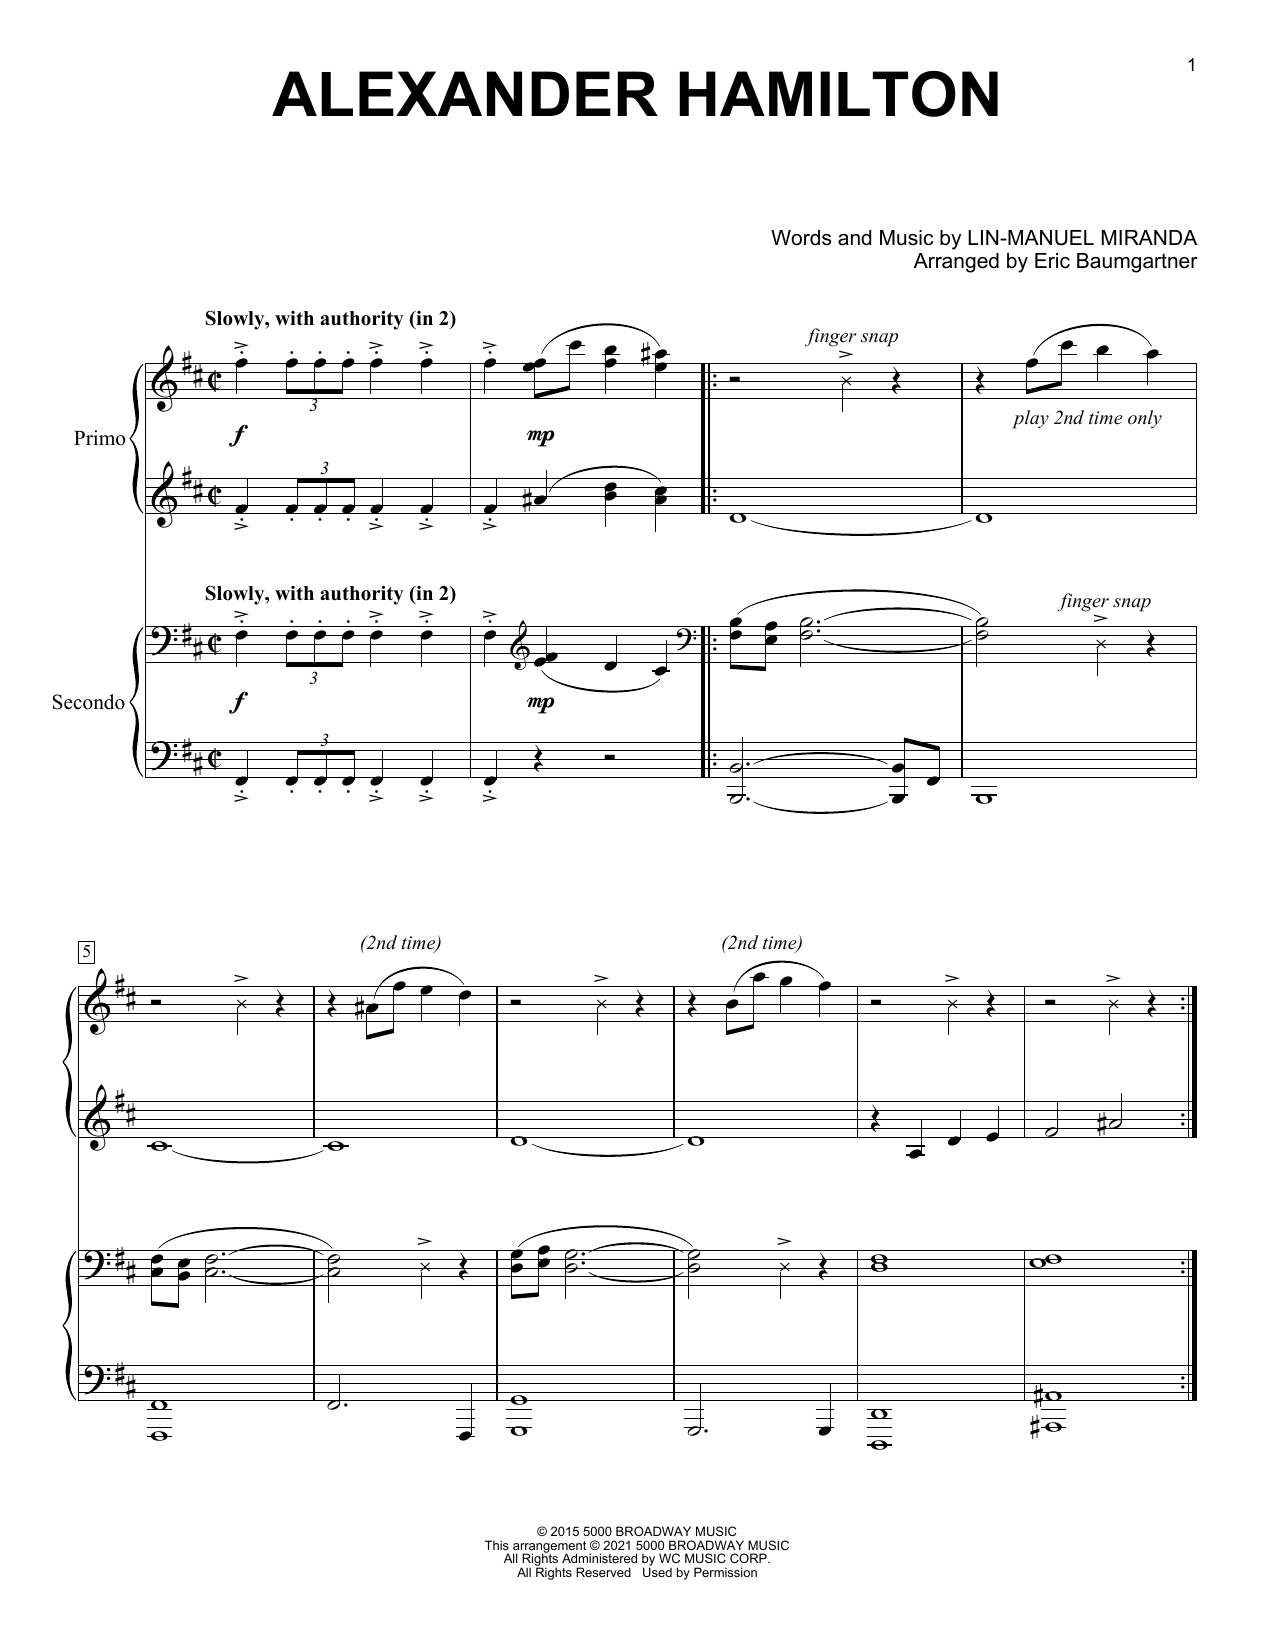 Download Lin-Manuel Miranda Alexander Hamilton (from Hamilton) (arr. Eric Baumgartner) Sheet Music and learn how to play Piano Duet PDF digital score in minutes